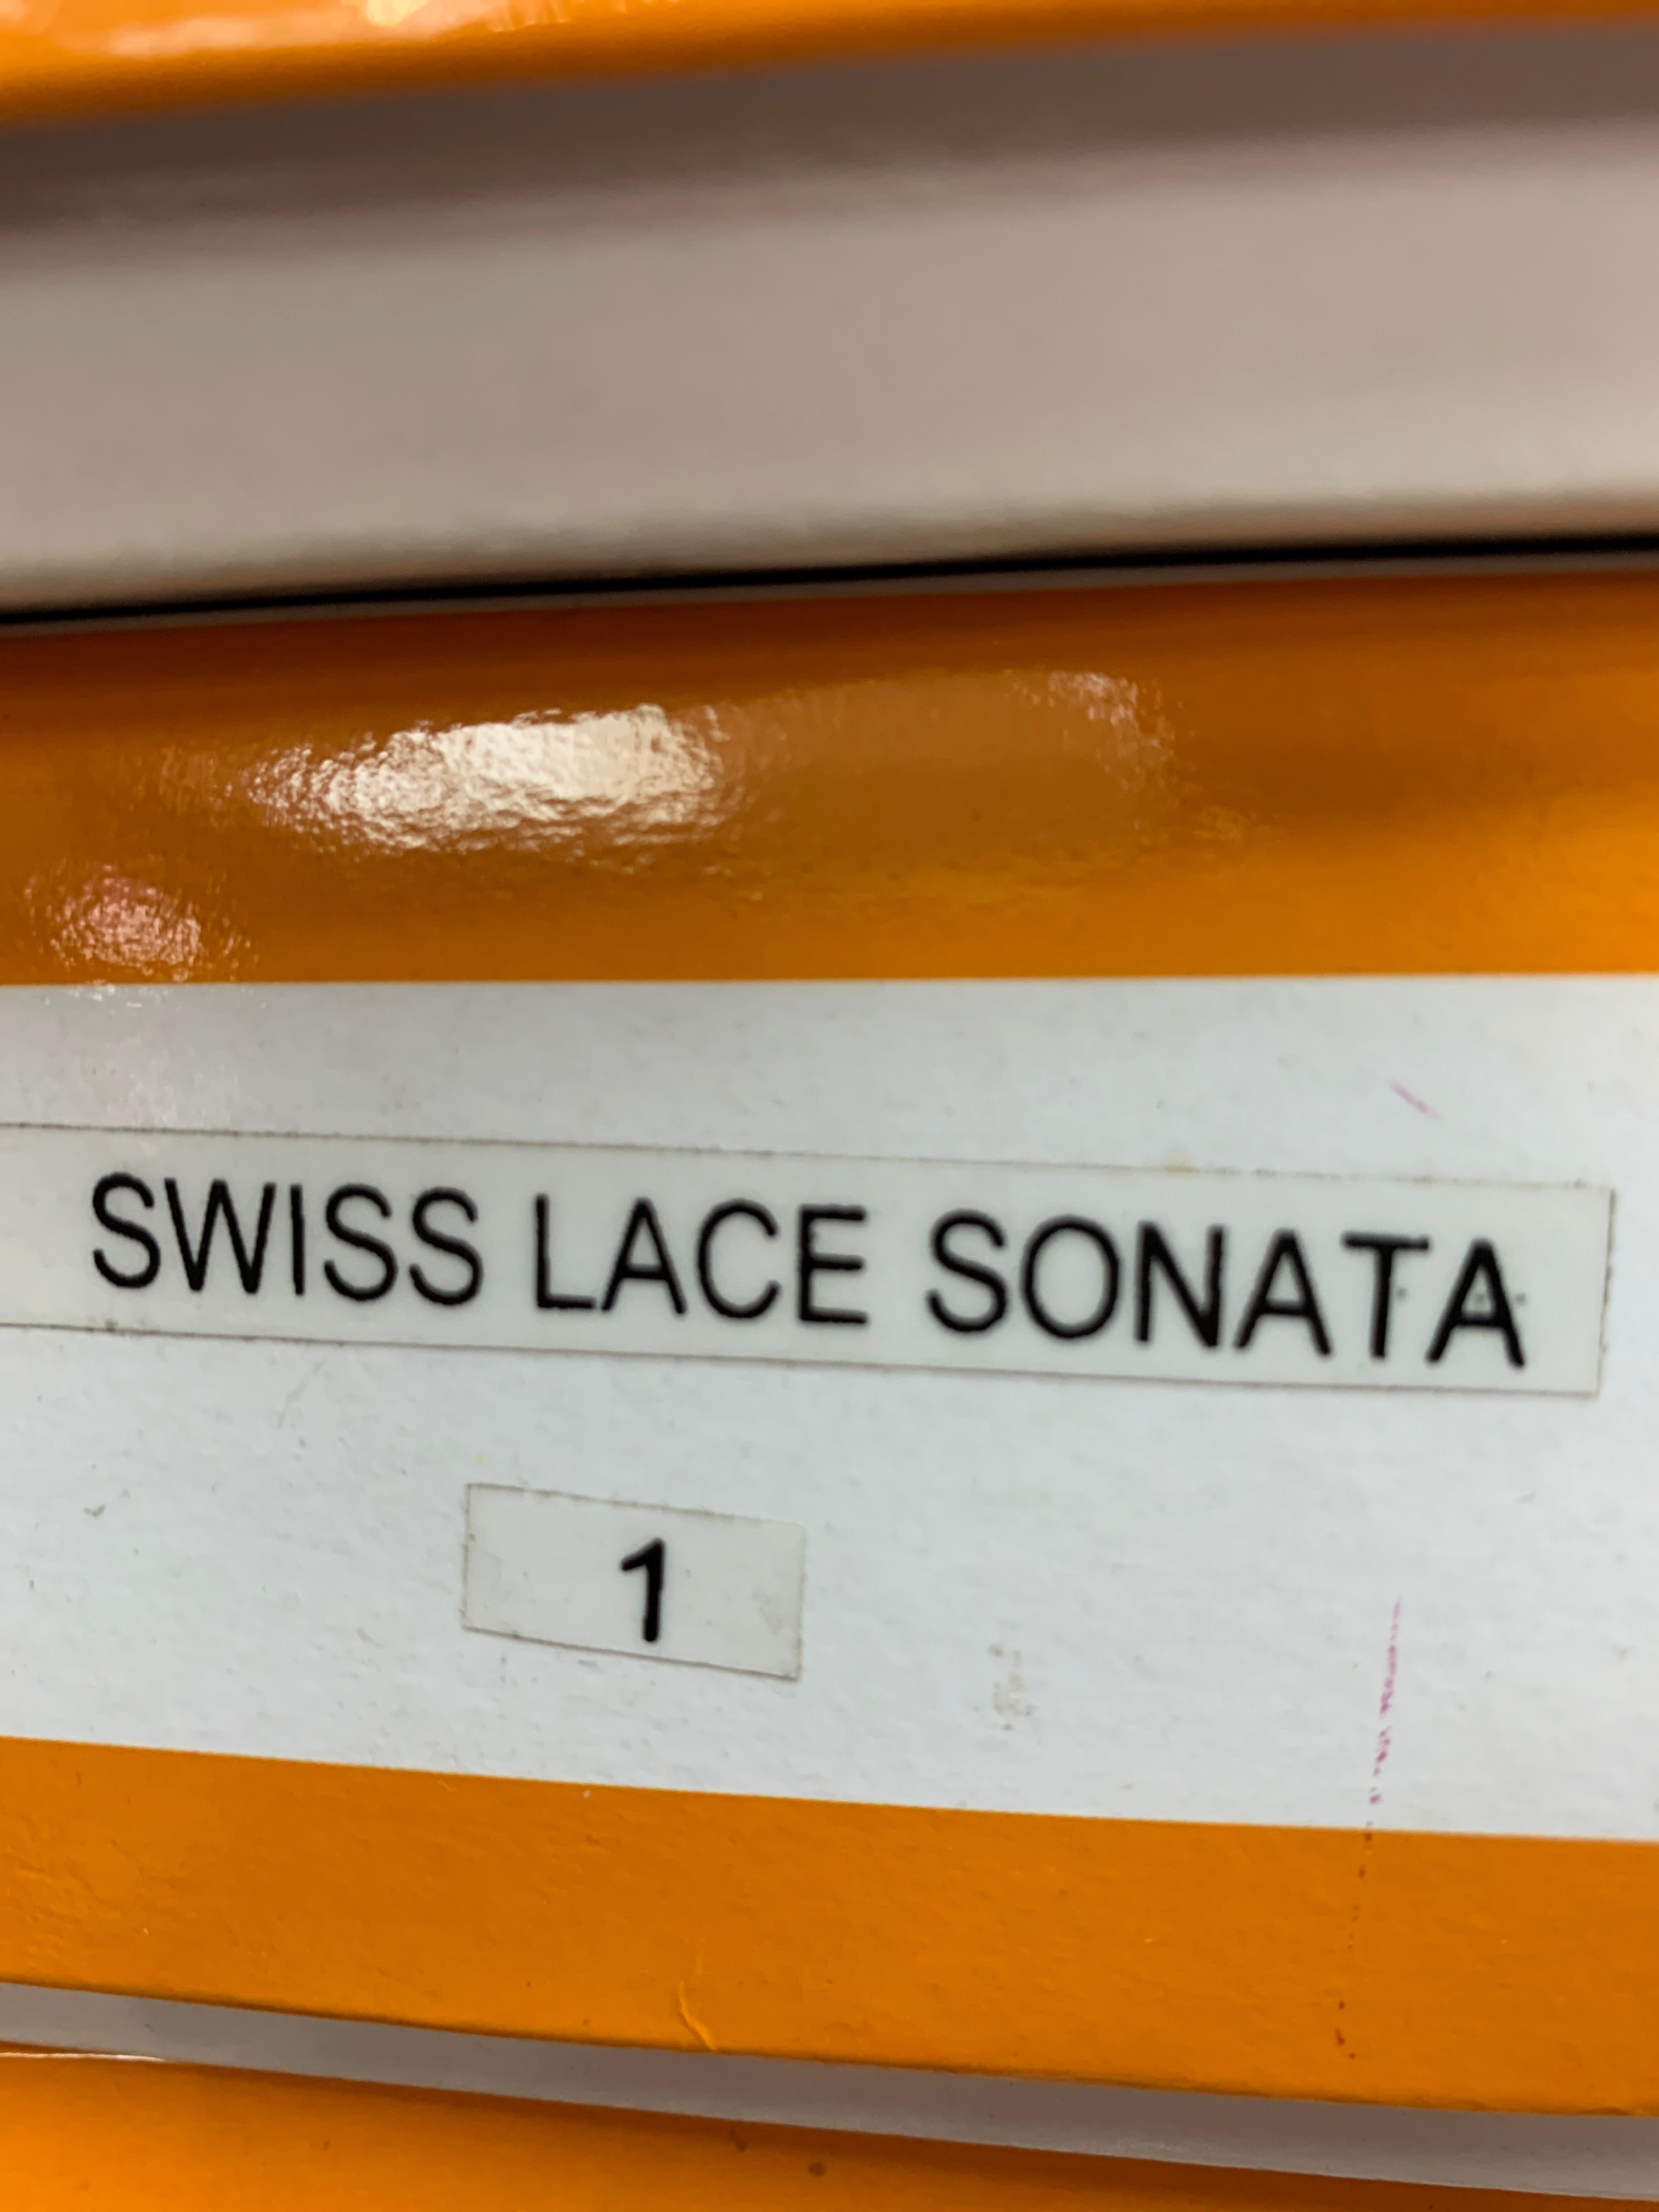 It’s a wig swiss lace sonata